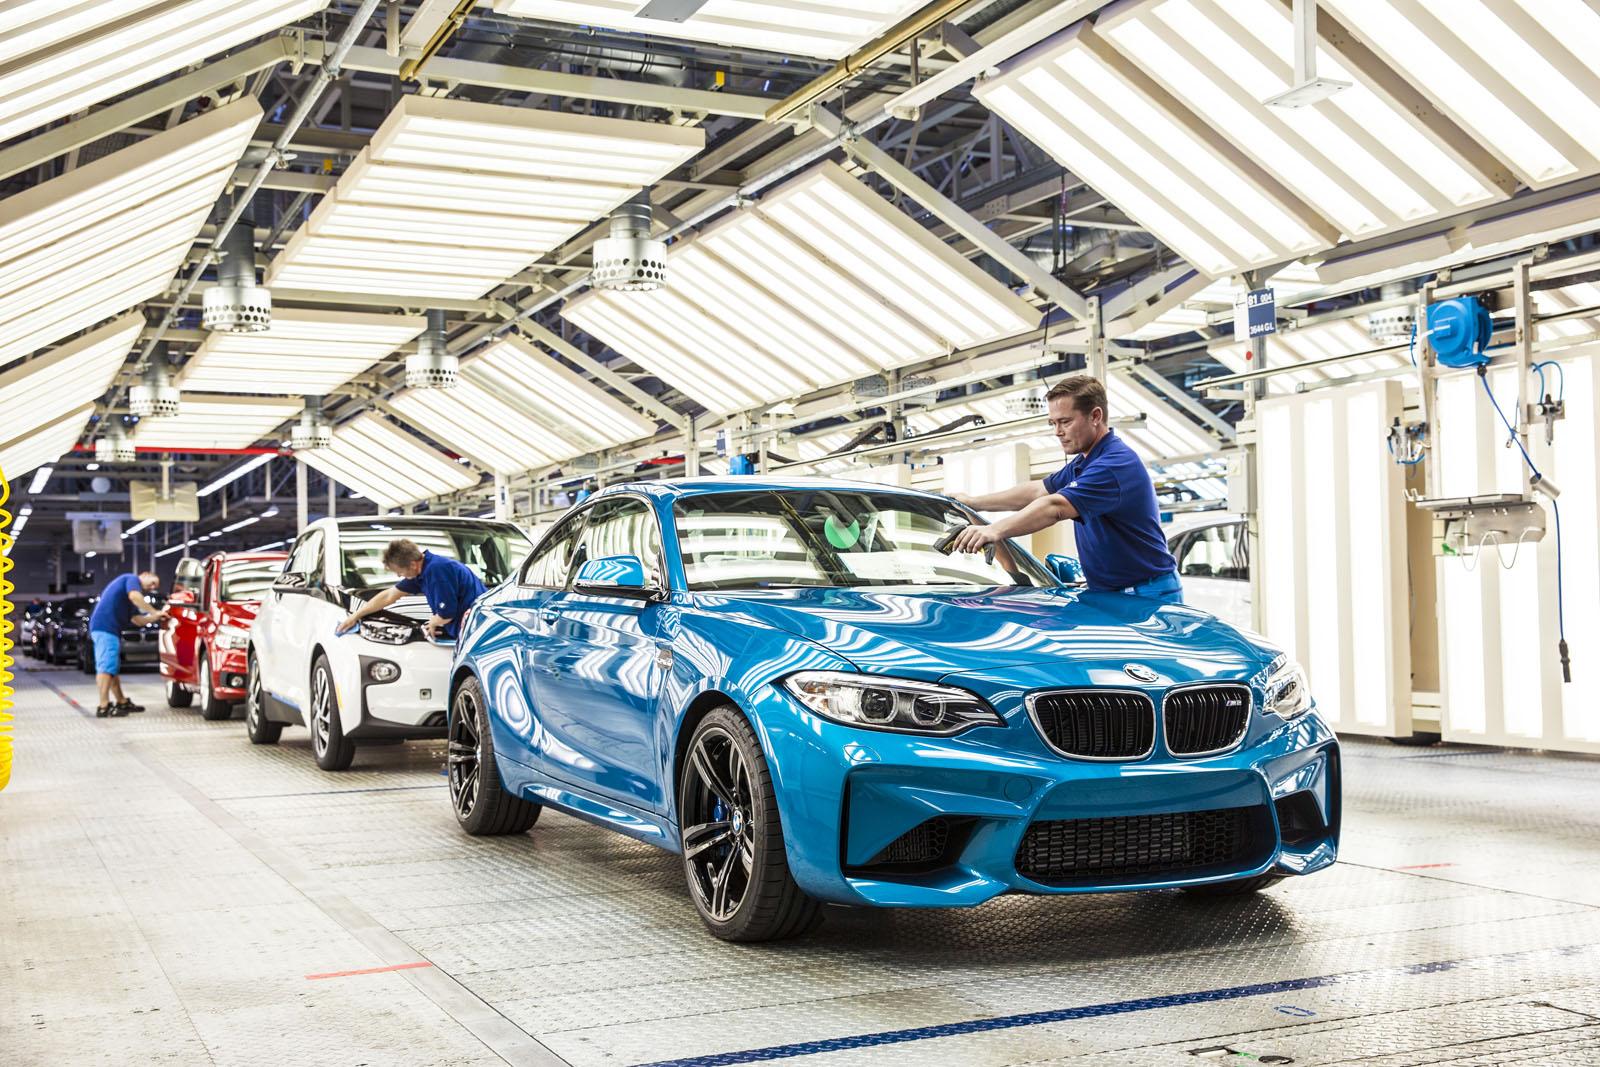 BMW u Mađarskoj gradi fabriku vrijednu milijardu eura